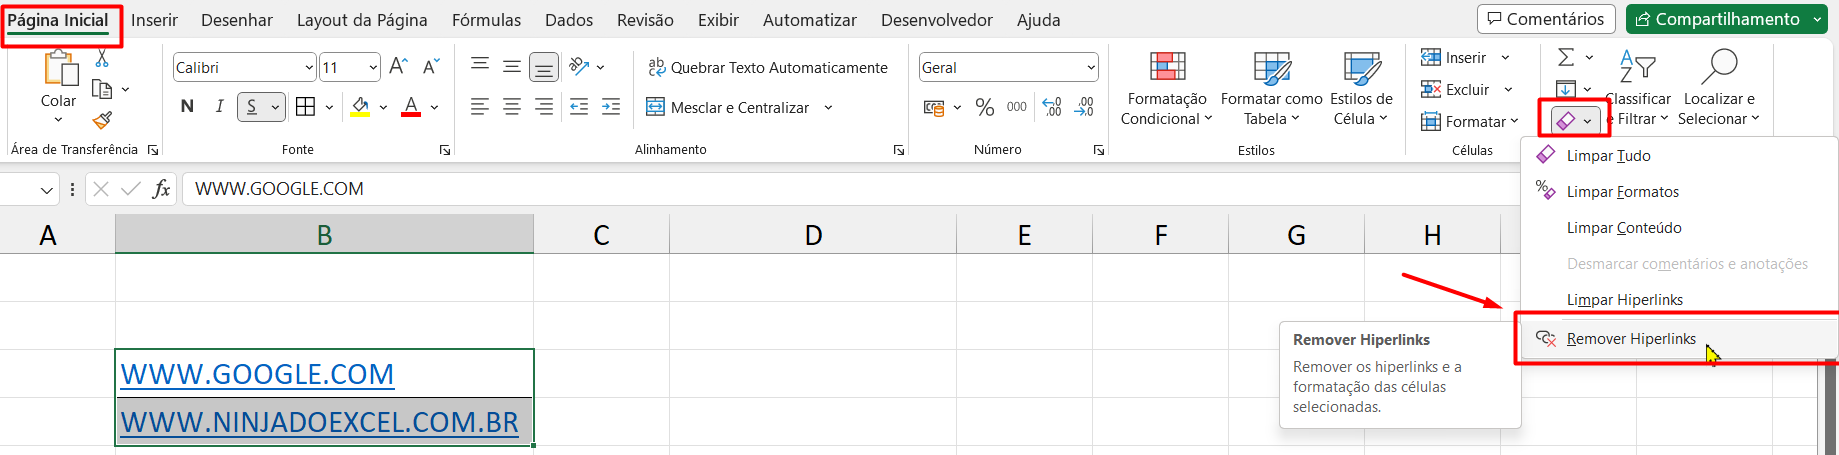 Remover Hiperlinks no Excel, outro método